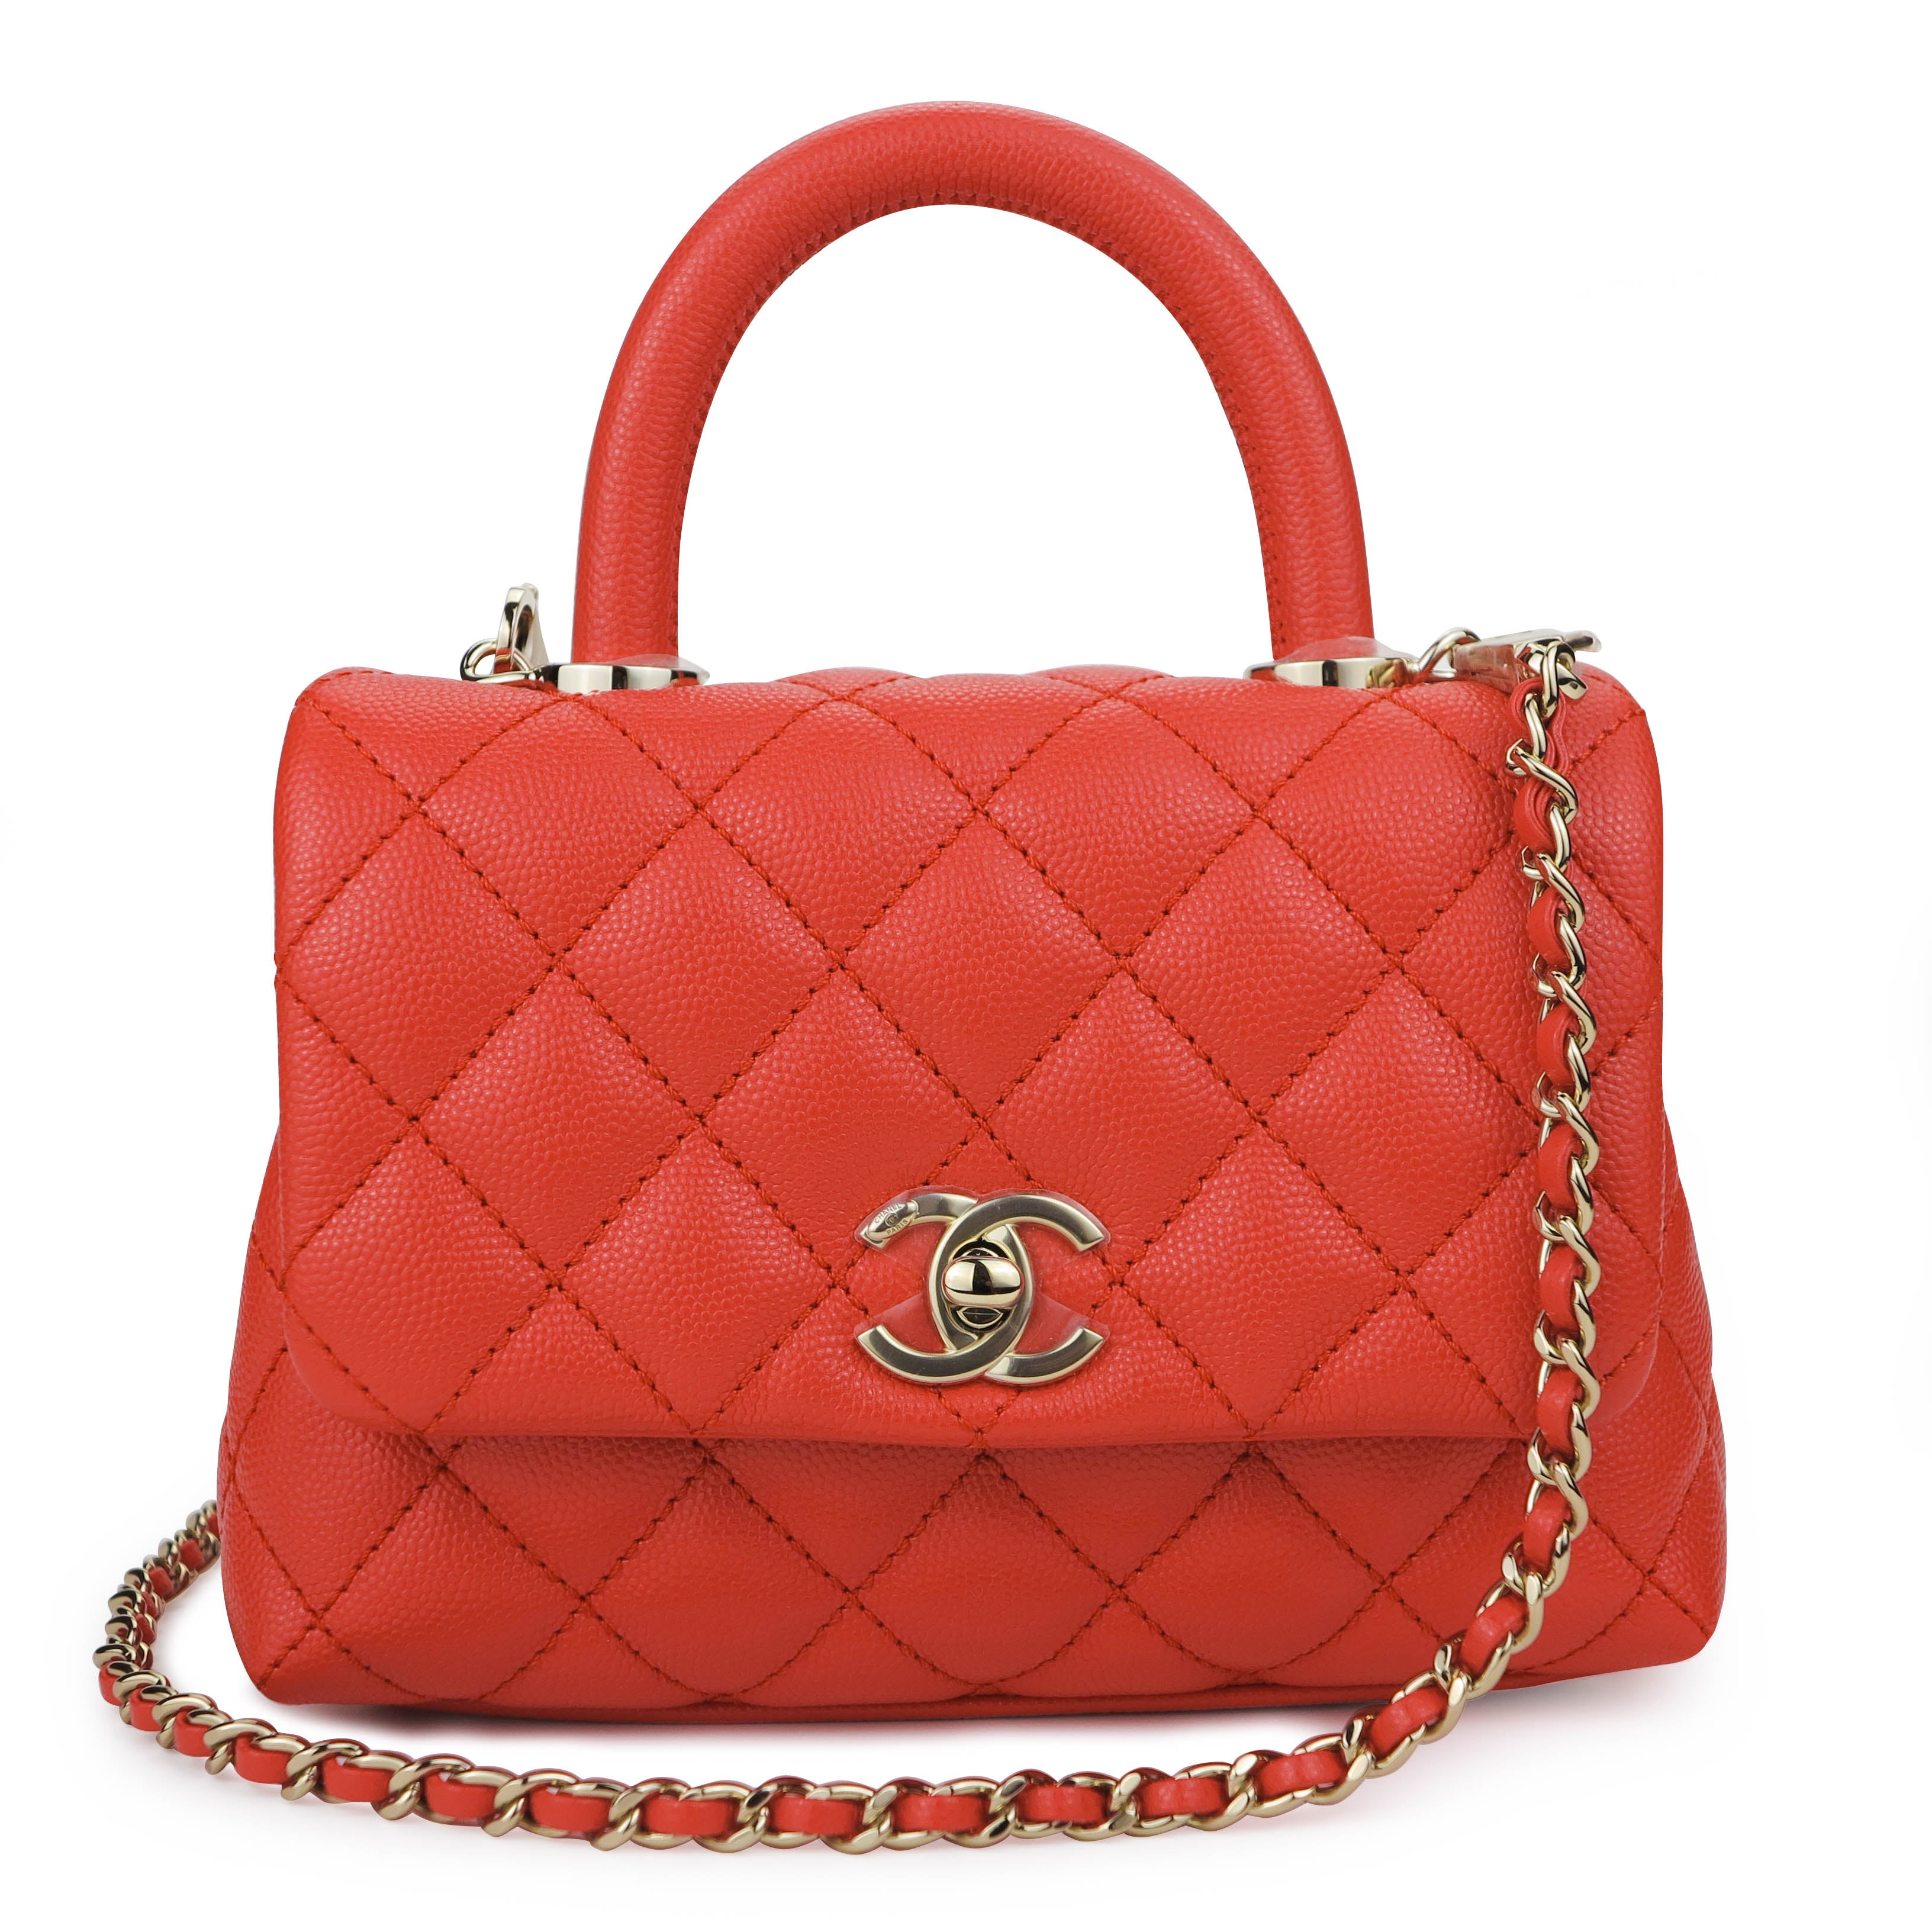 coco chanel red purse bag